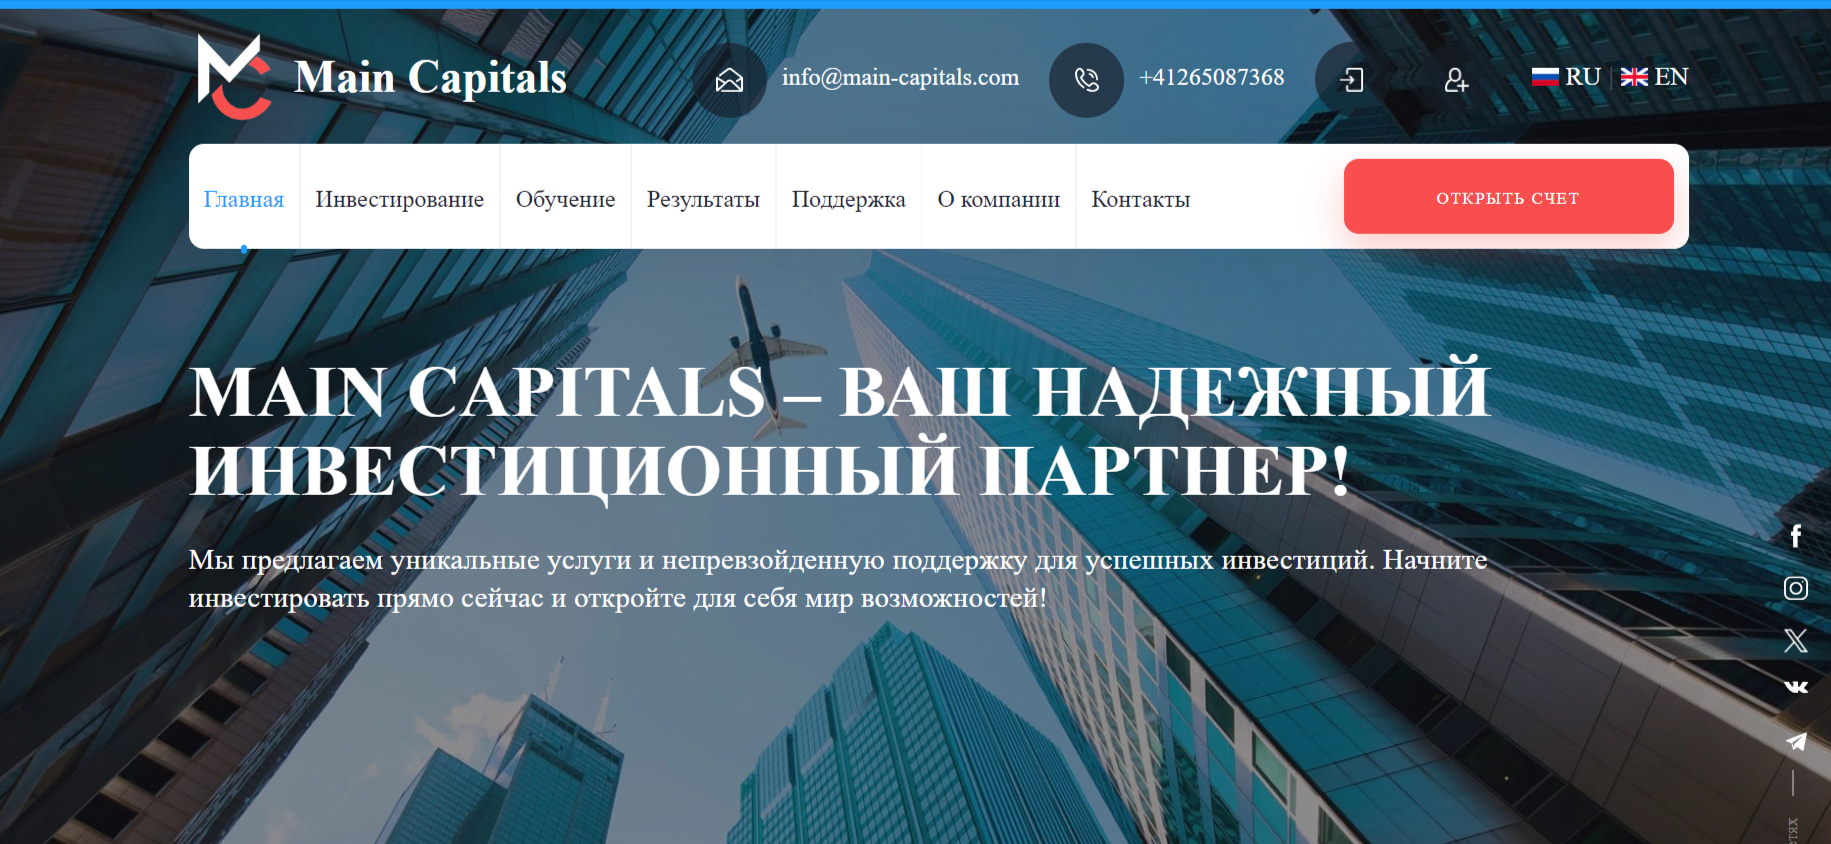 Main Capitals - официальный сайт